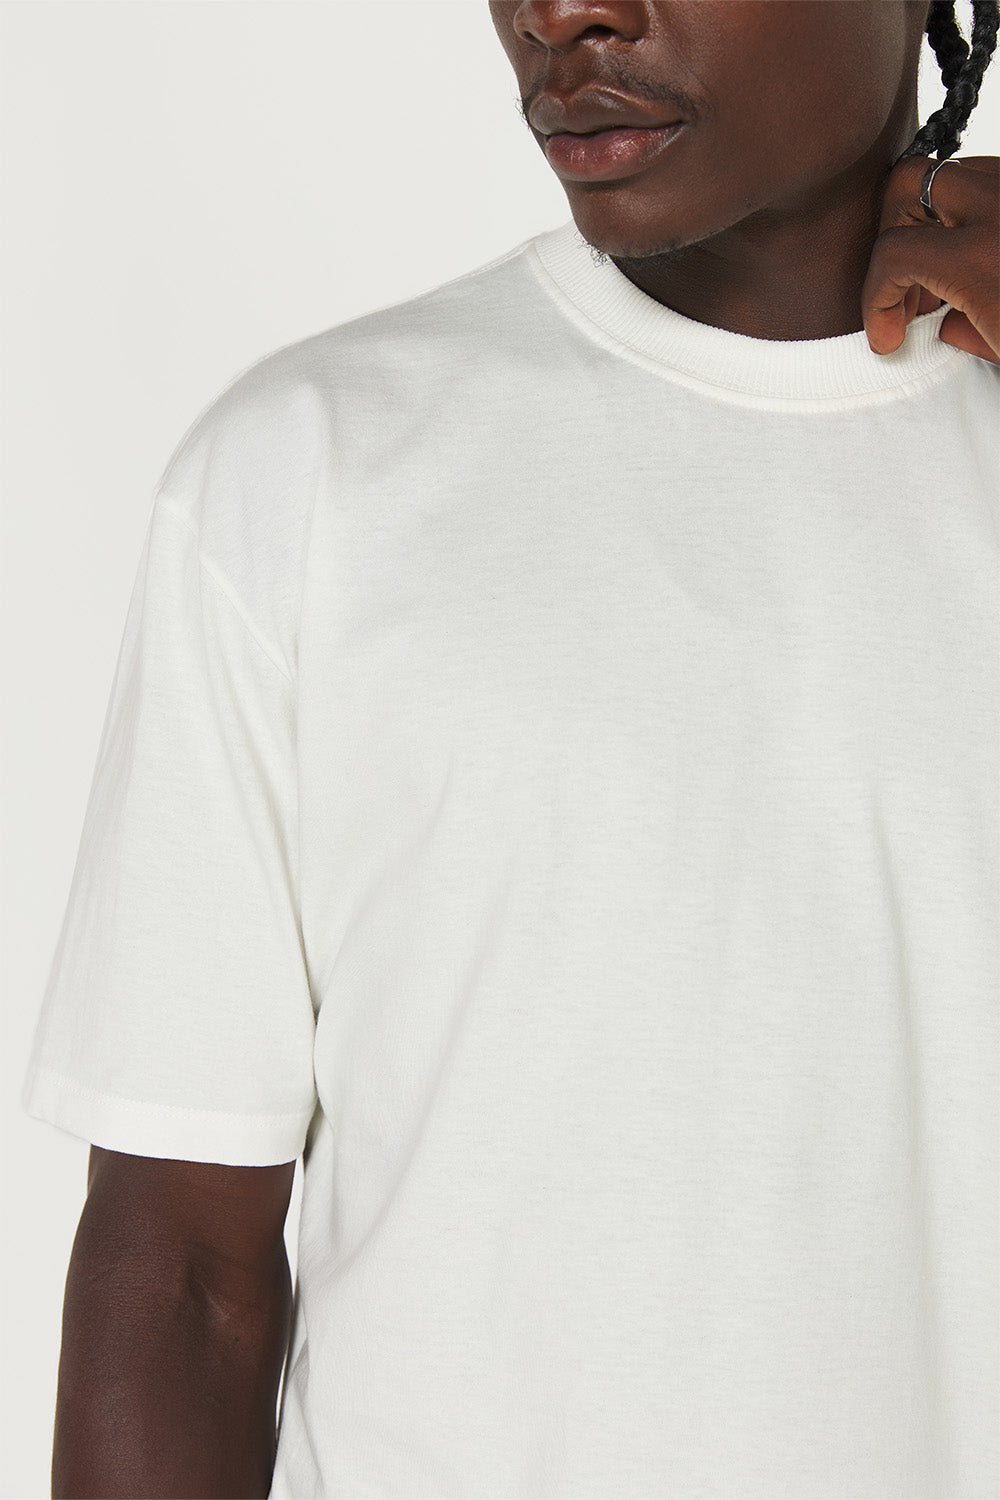 camiseta streetwear unissex personalizada qualidade intermediária